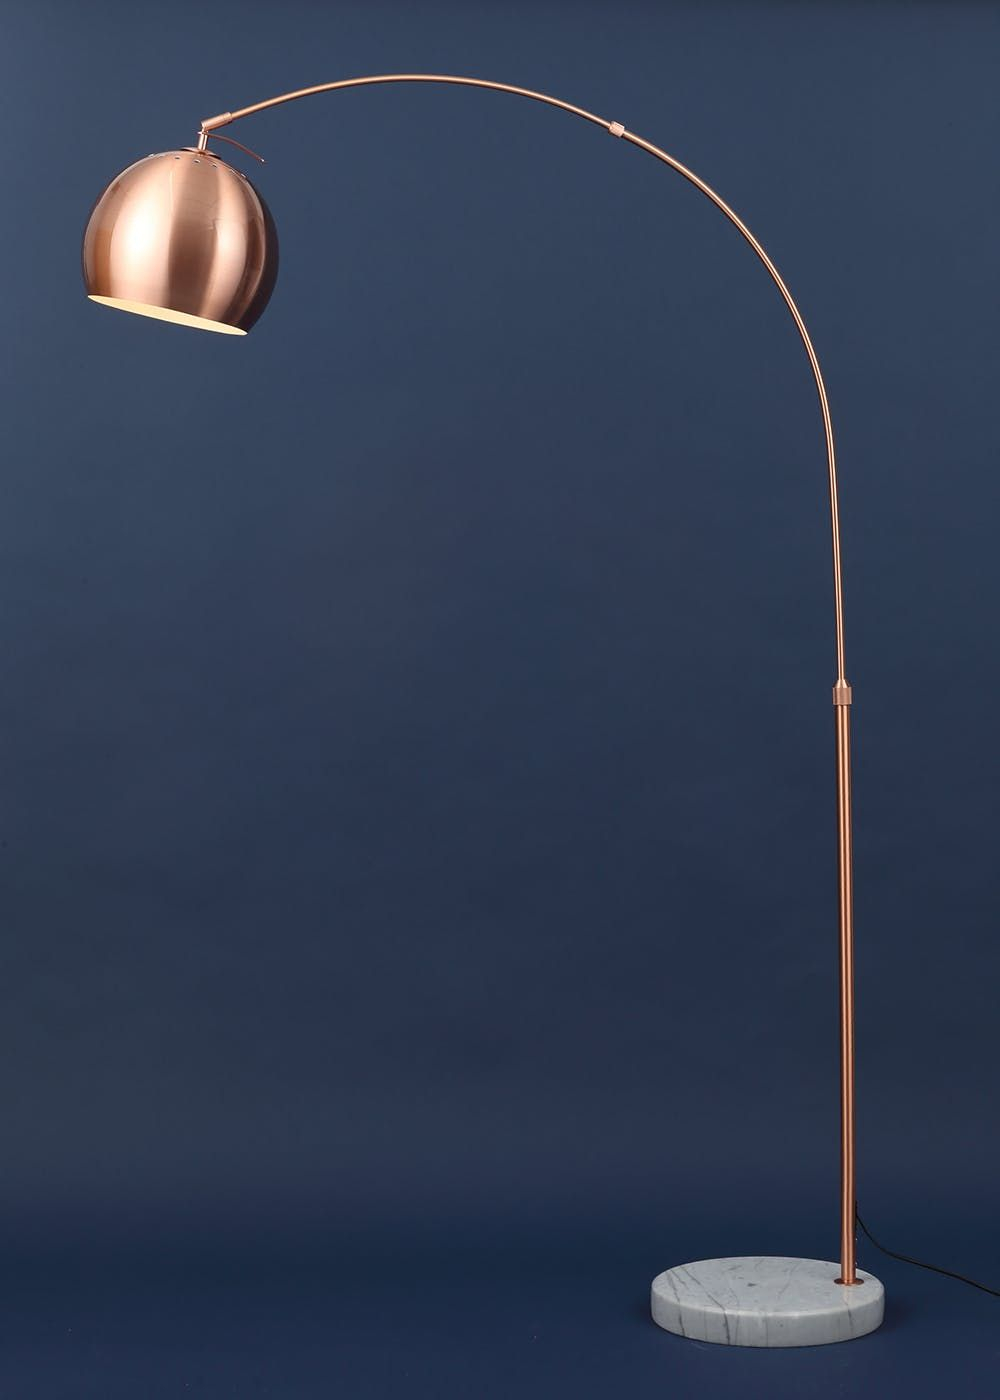 Lamps In Floor Lighting Metal Arc Floor Lamp Touch Sensor intended for dimensions 1000 X 1400